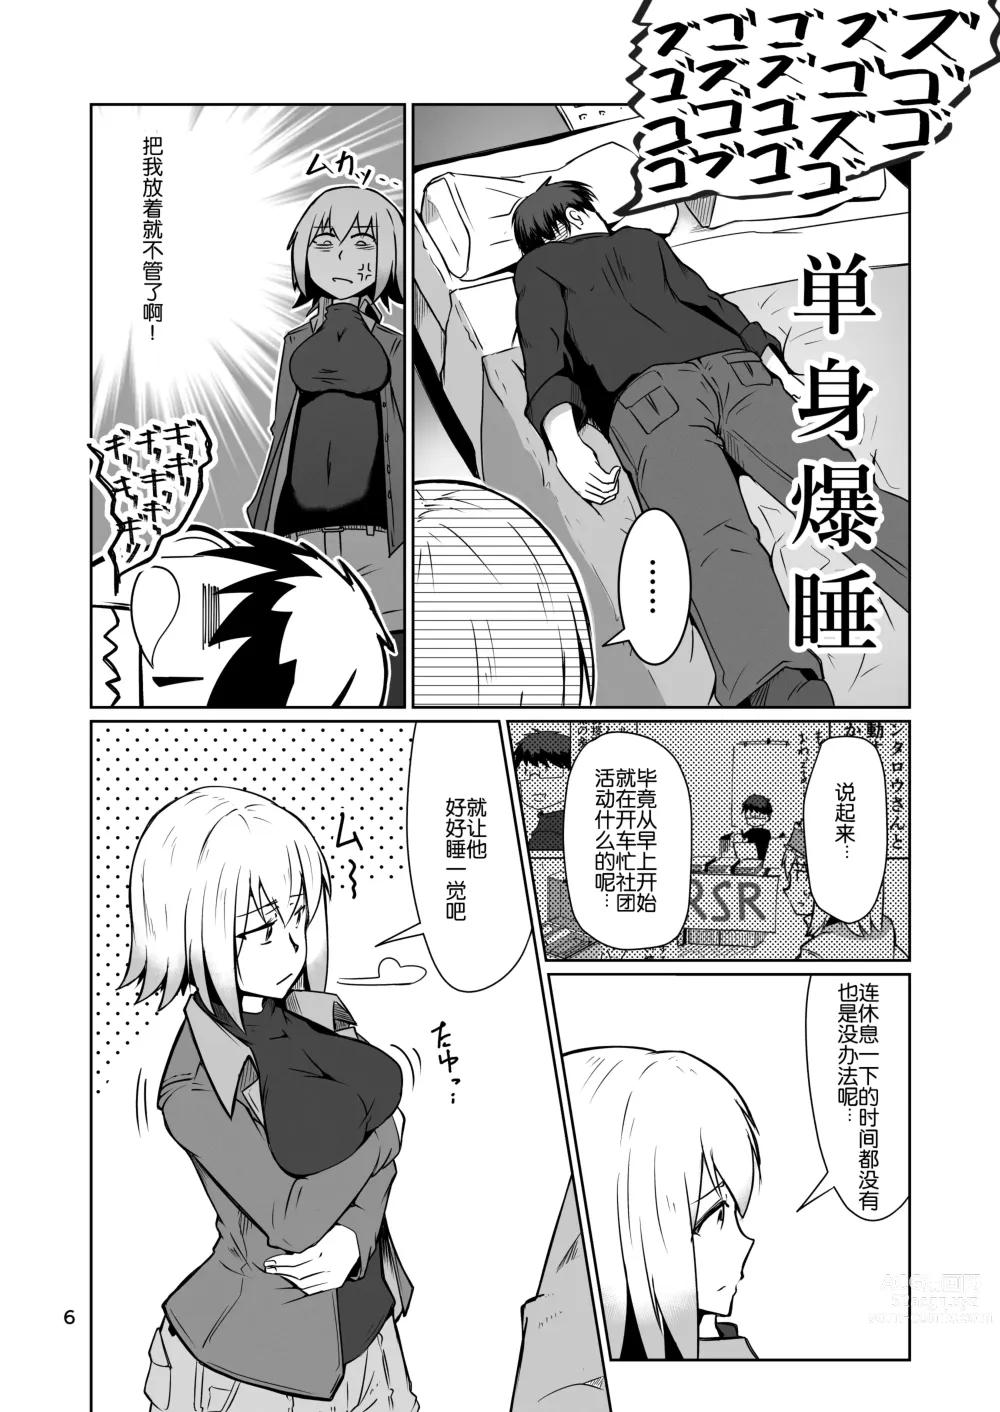 Page 6 of doujinshi Cosplay Uriko no Otomodachi Daisannwa: Fast Cosex!